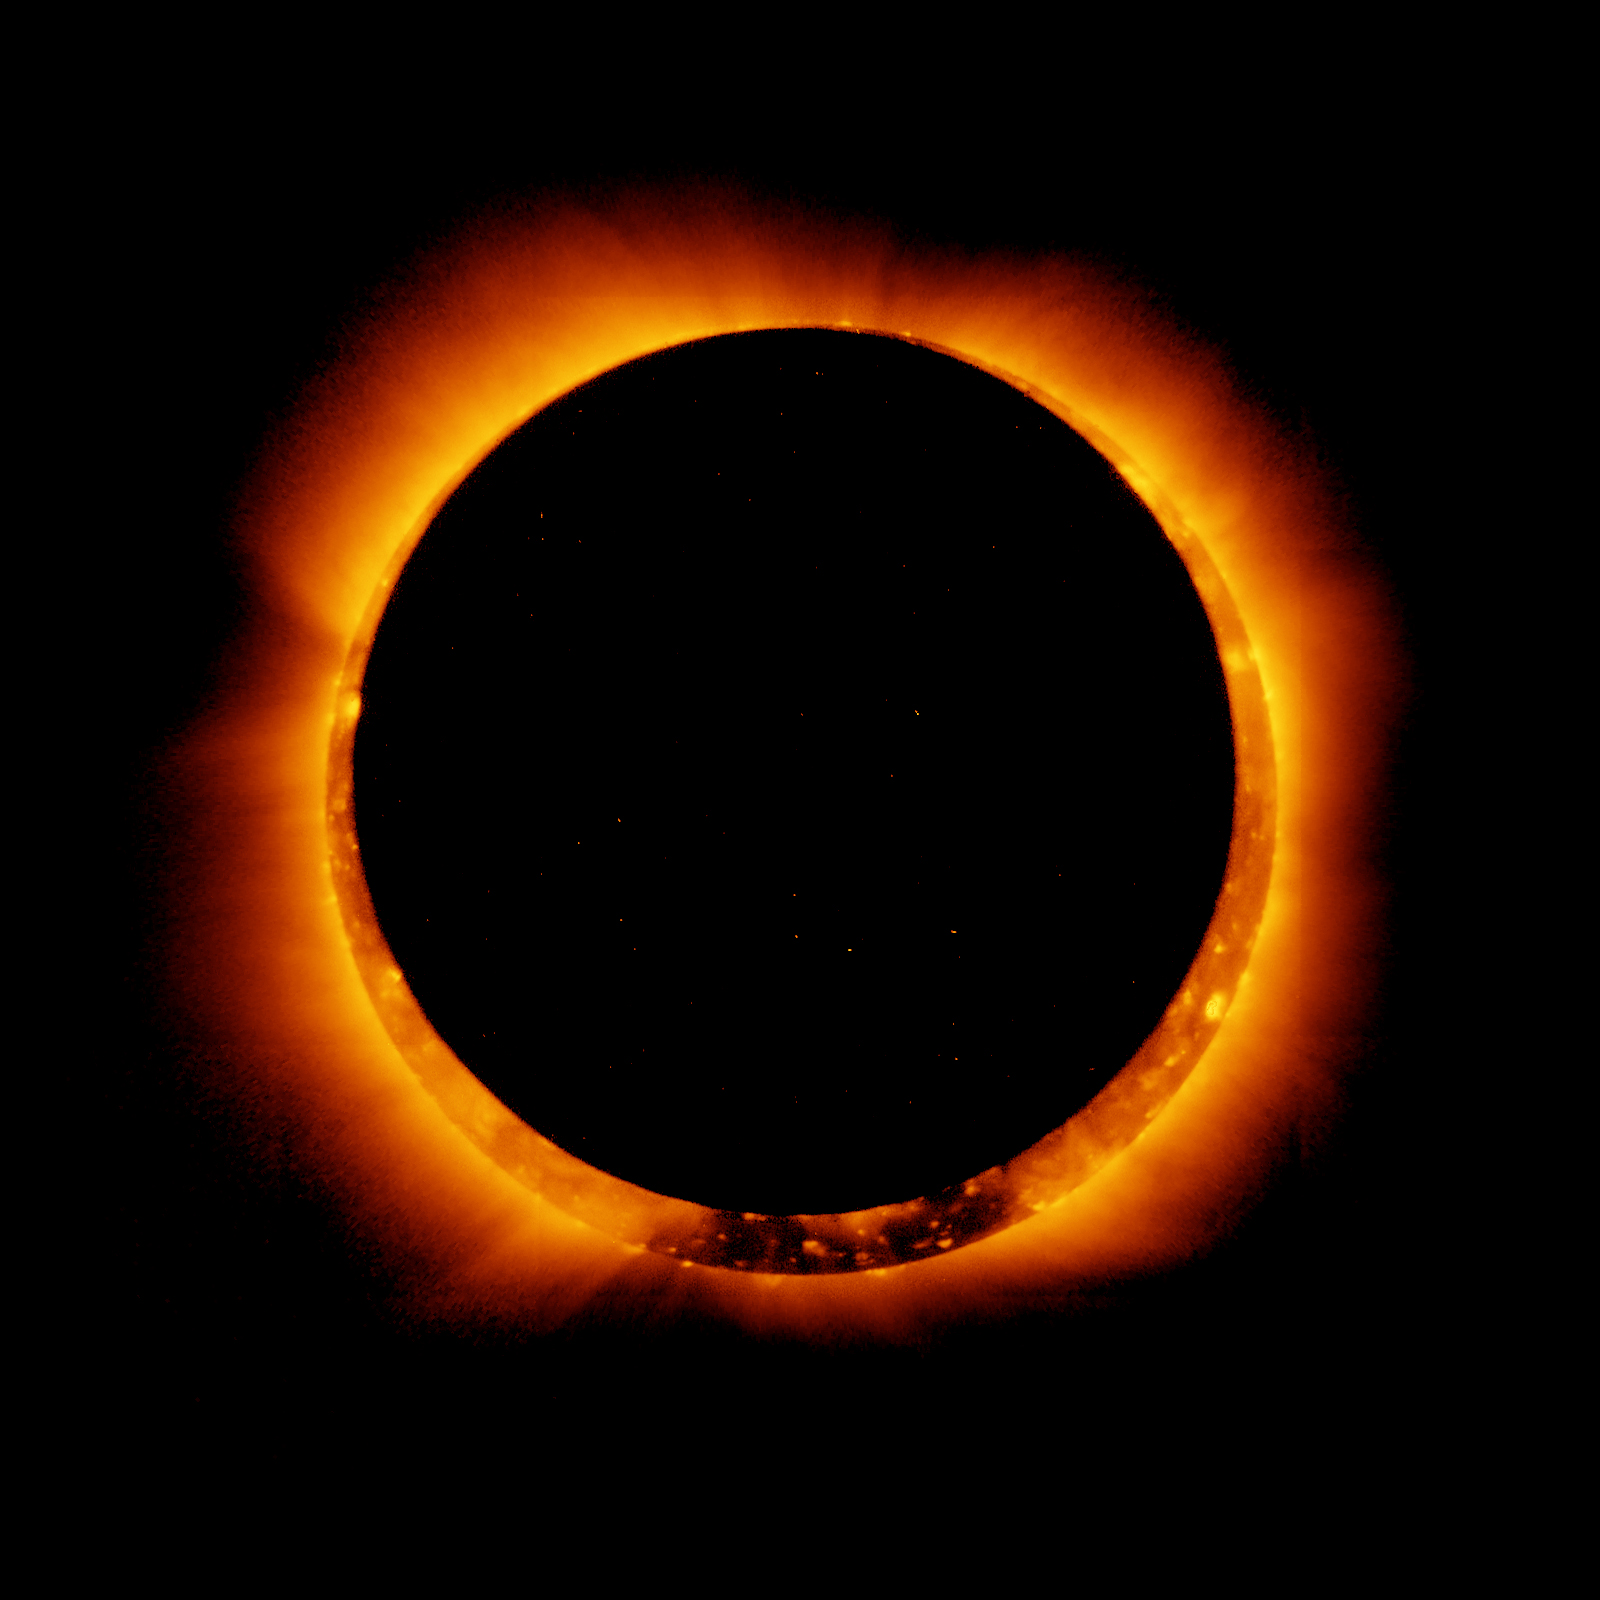 Hinode_Observes_Annular_Solar_Eclipse,_4_Jan_2011.jpg